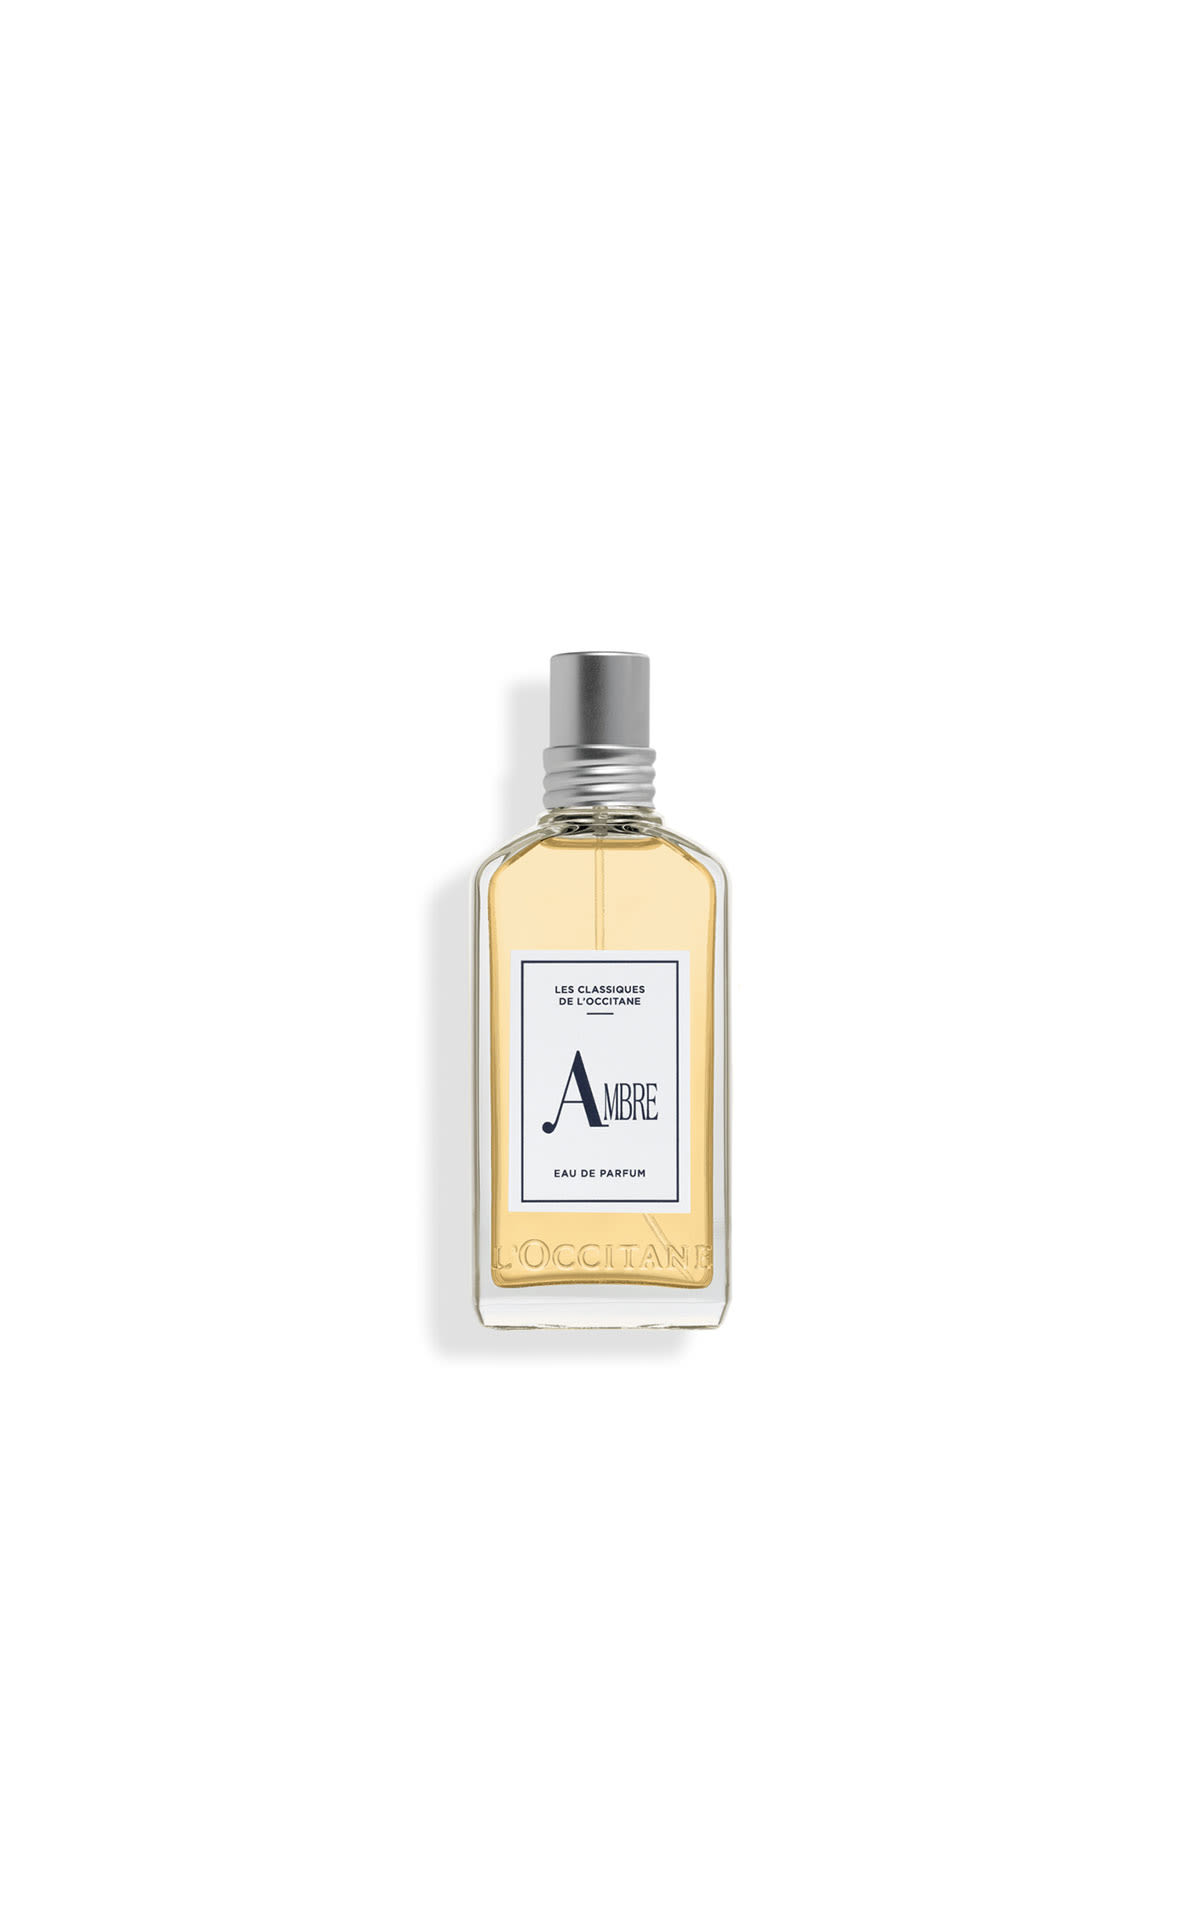 L'Occitane Amber eau de parfum from Bicester Village